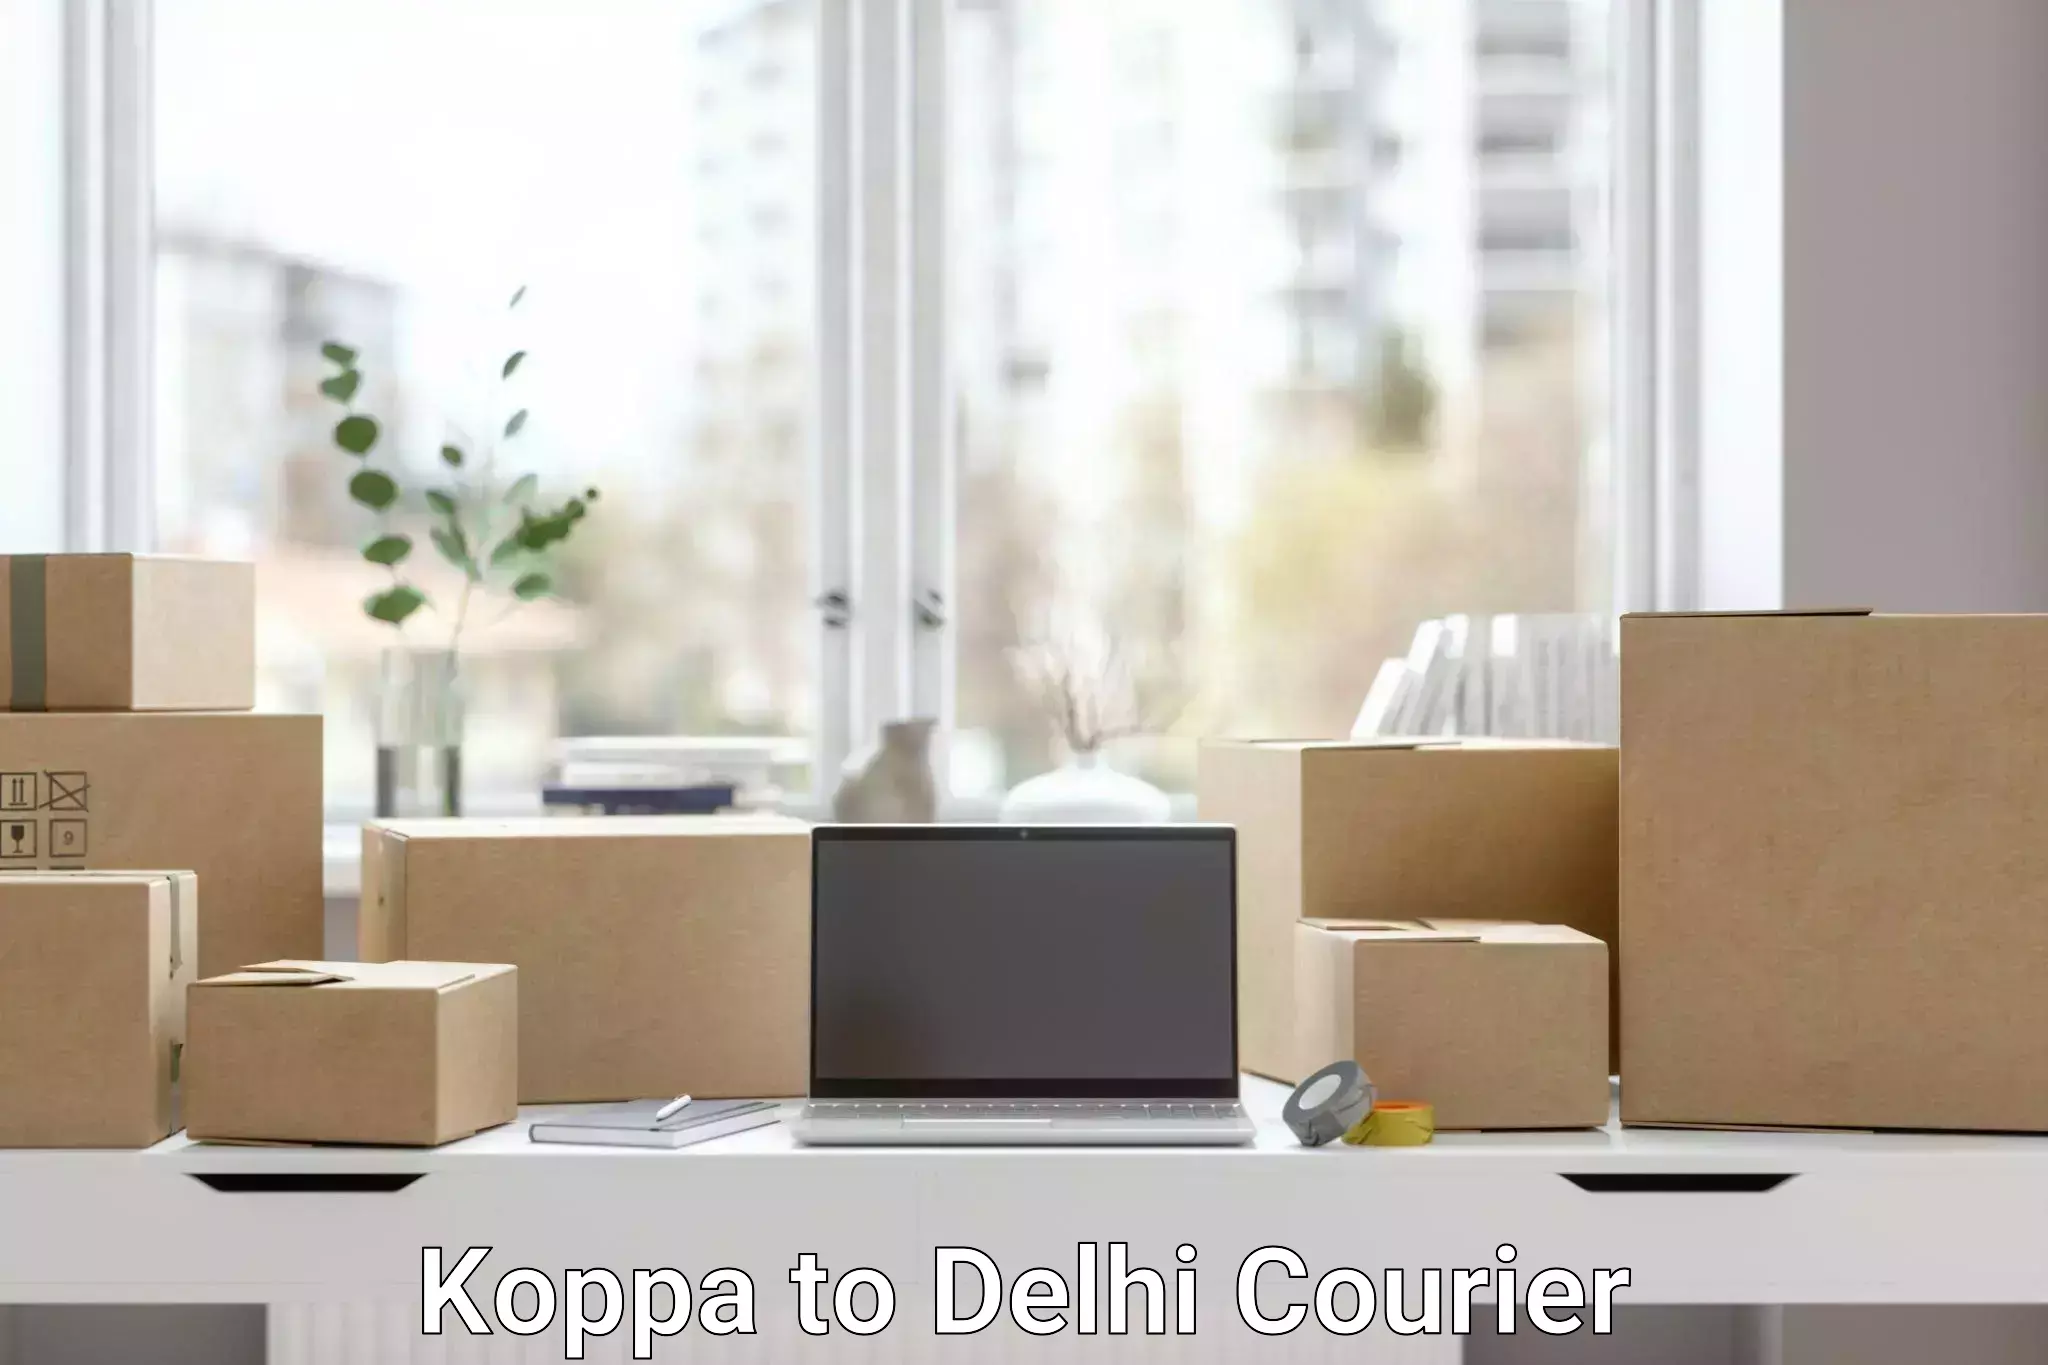 Modern delivery technologies in Koppa to Delhi